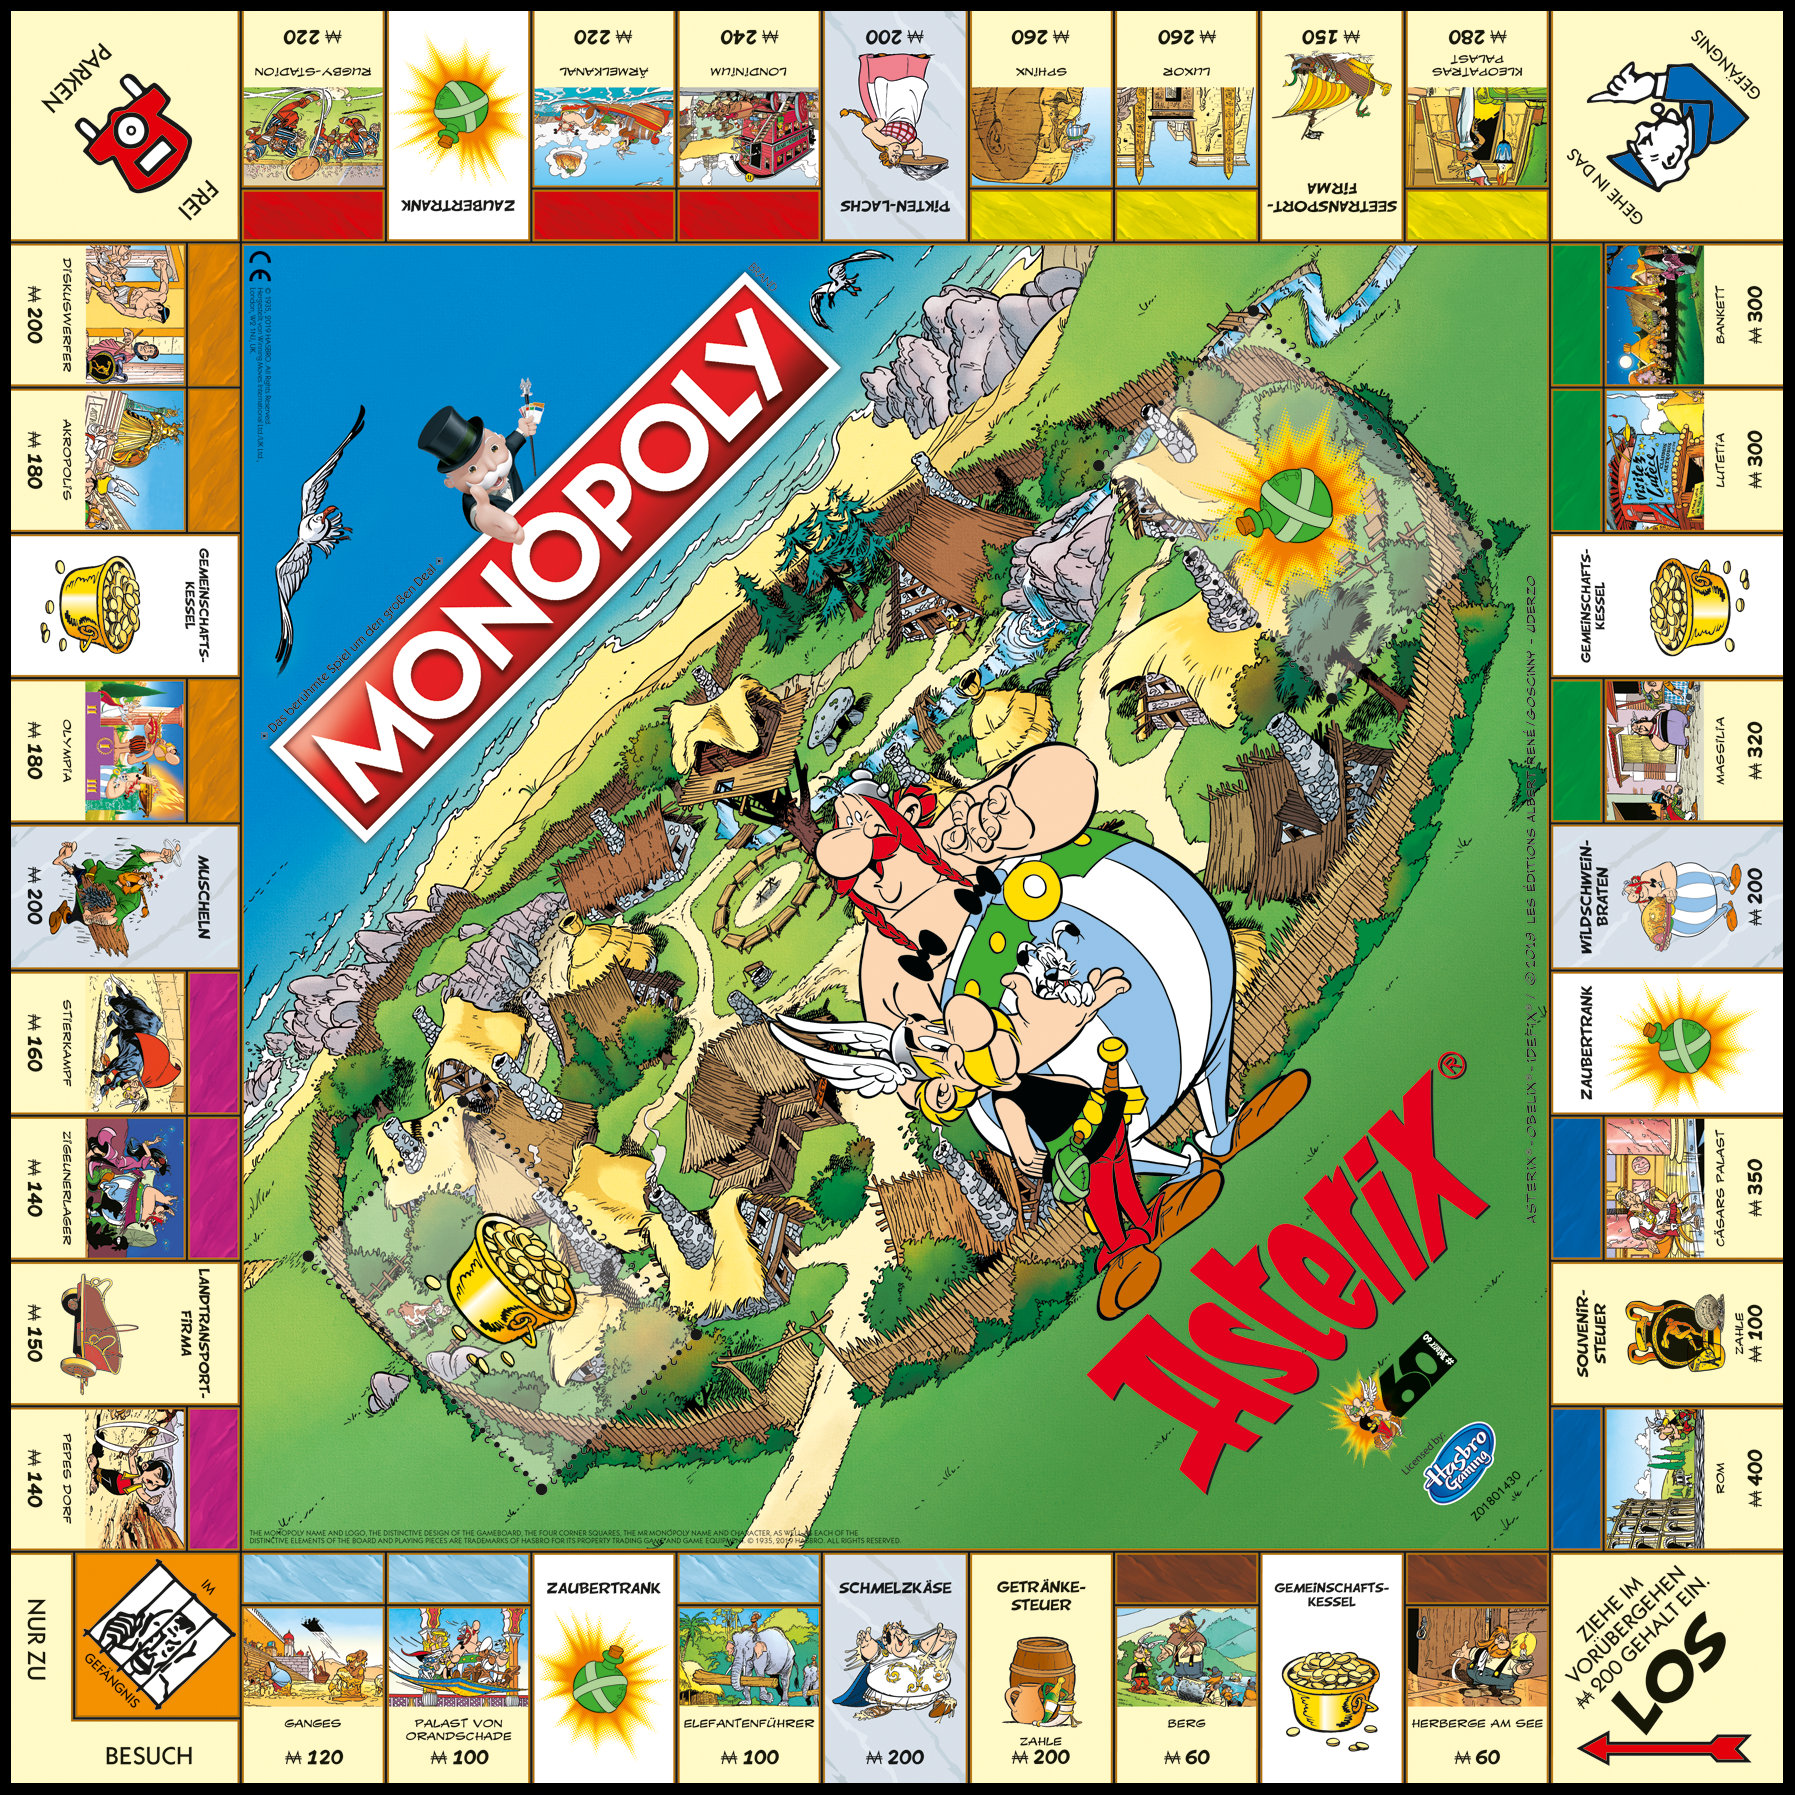 Obelix und Asterix Monopoly